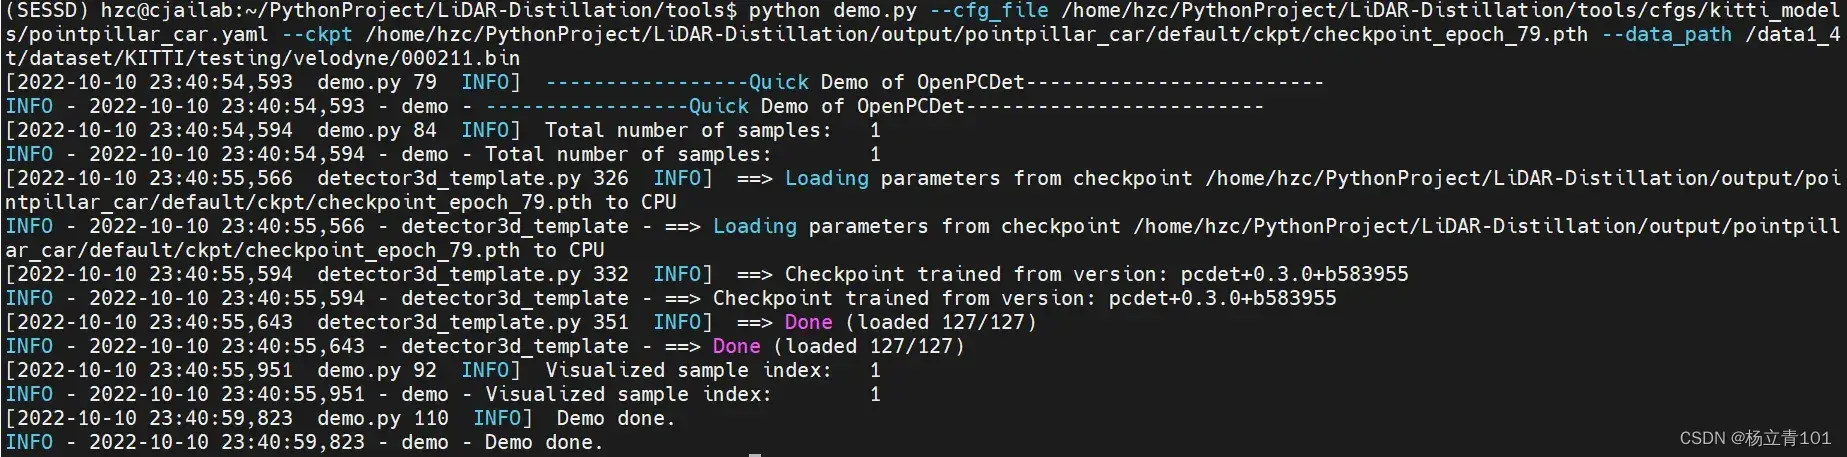 【OpenPCDet】Kitti数据集下训练PointPillars并评估&可视化